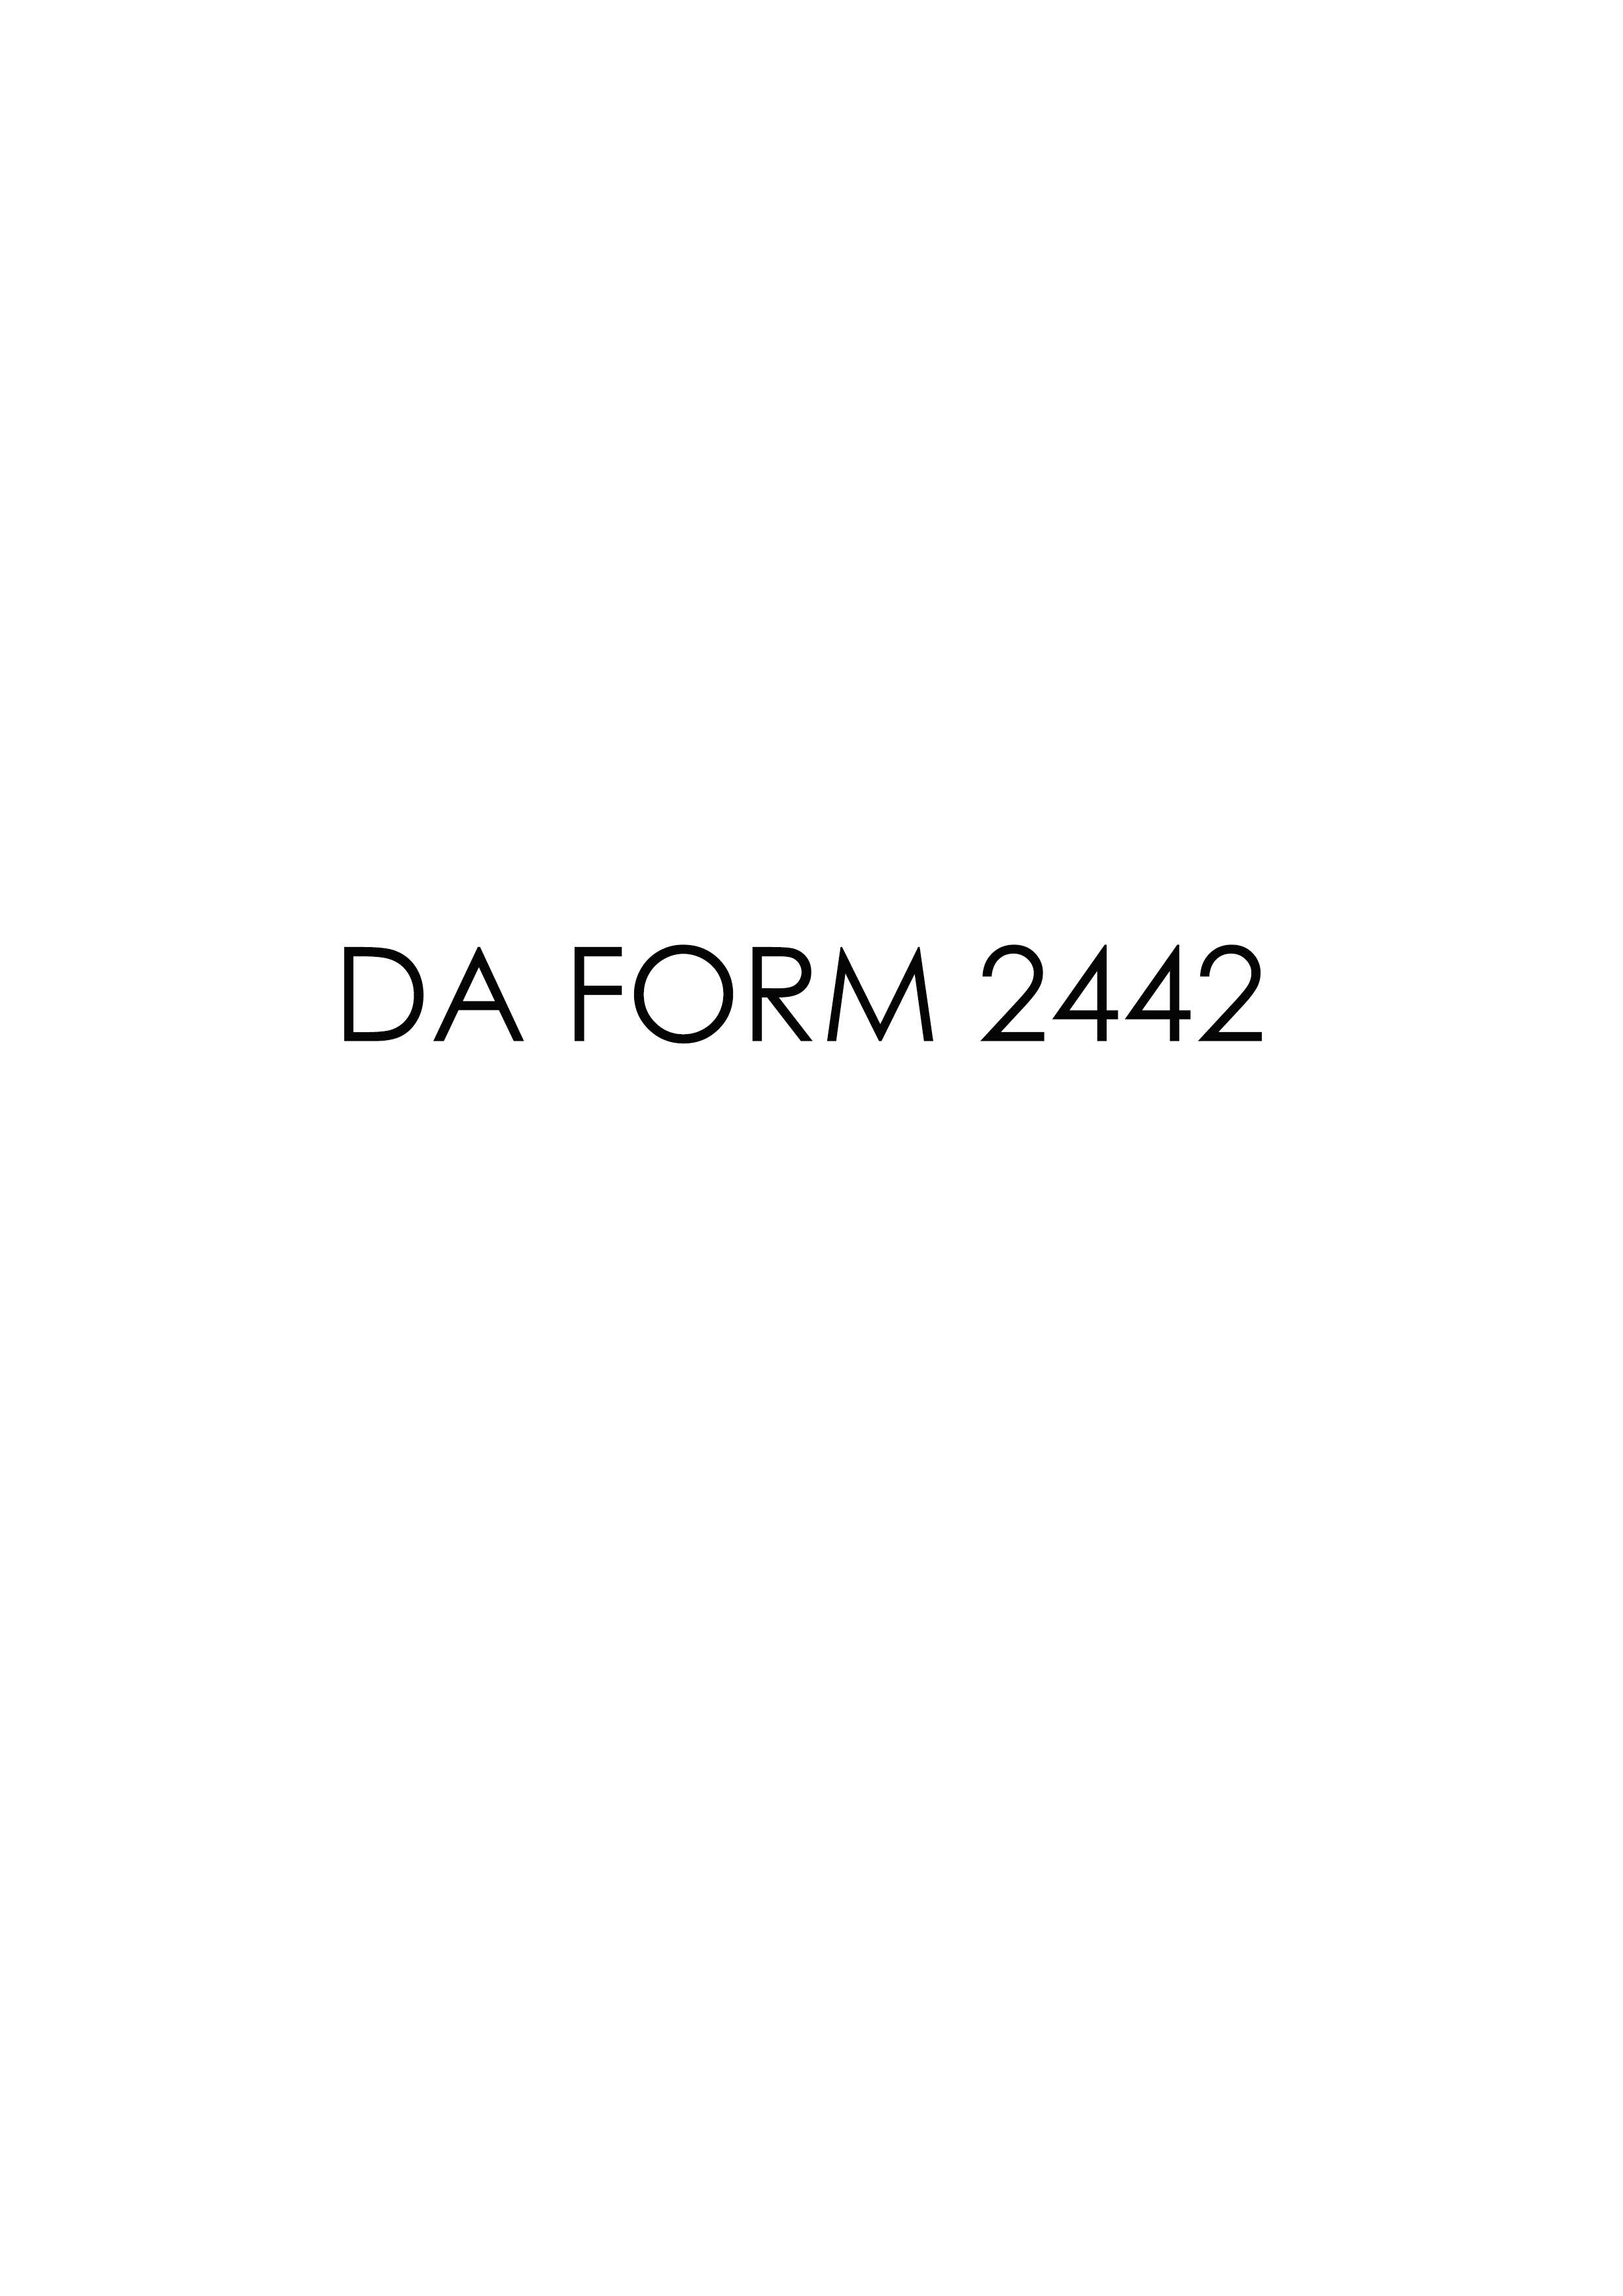 Download da 2442 Form